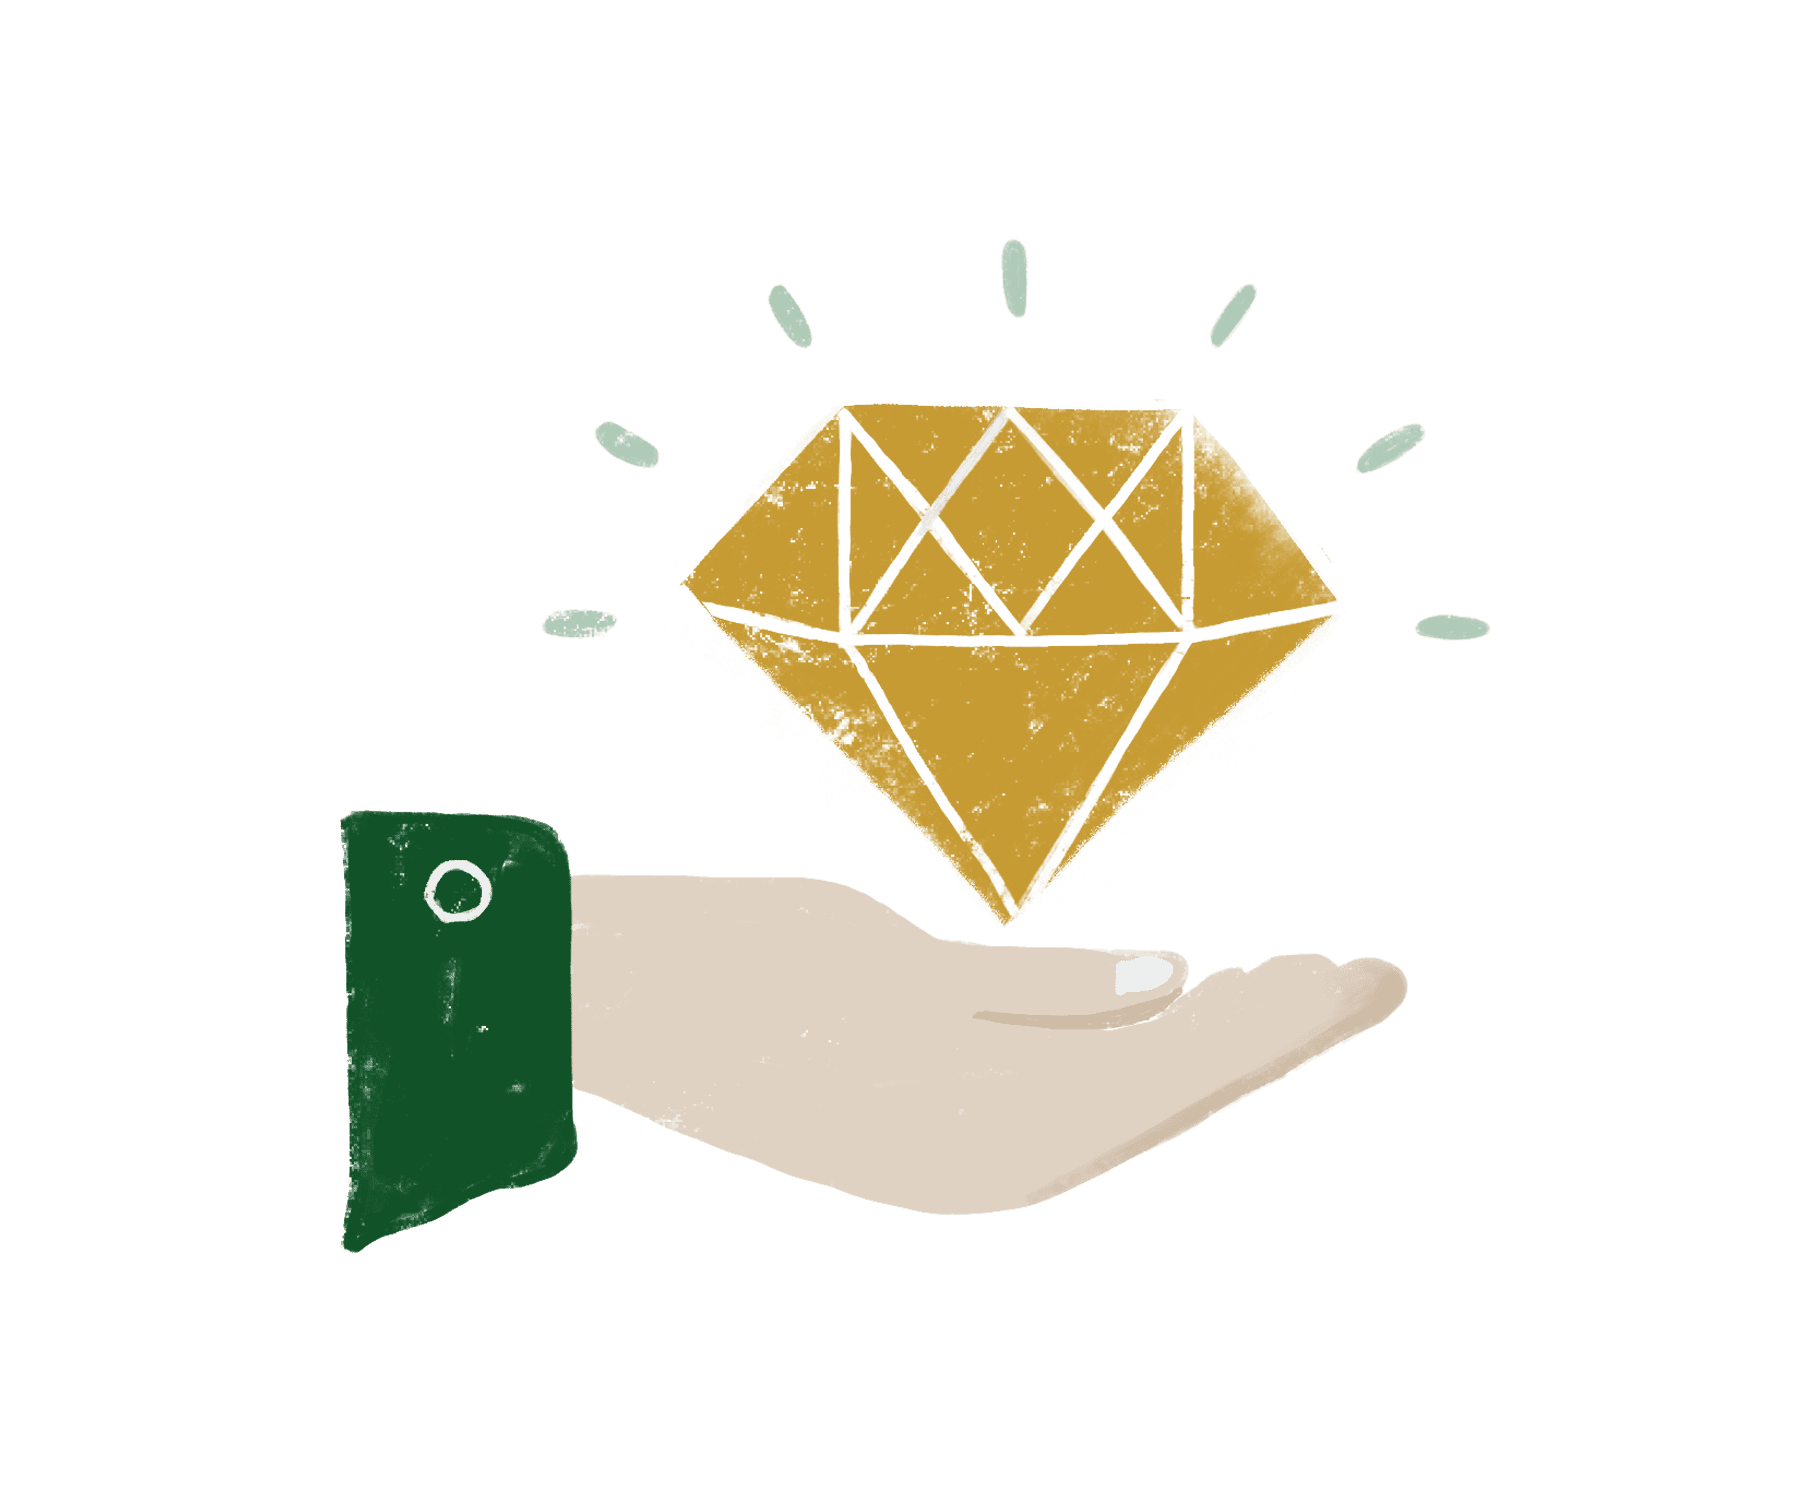 Digital chalk drawing of a hand holding a golden diamond